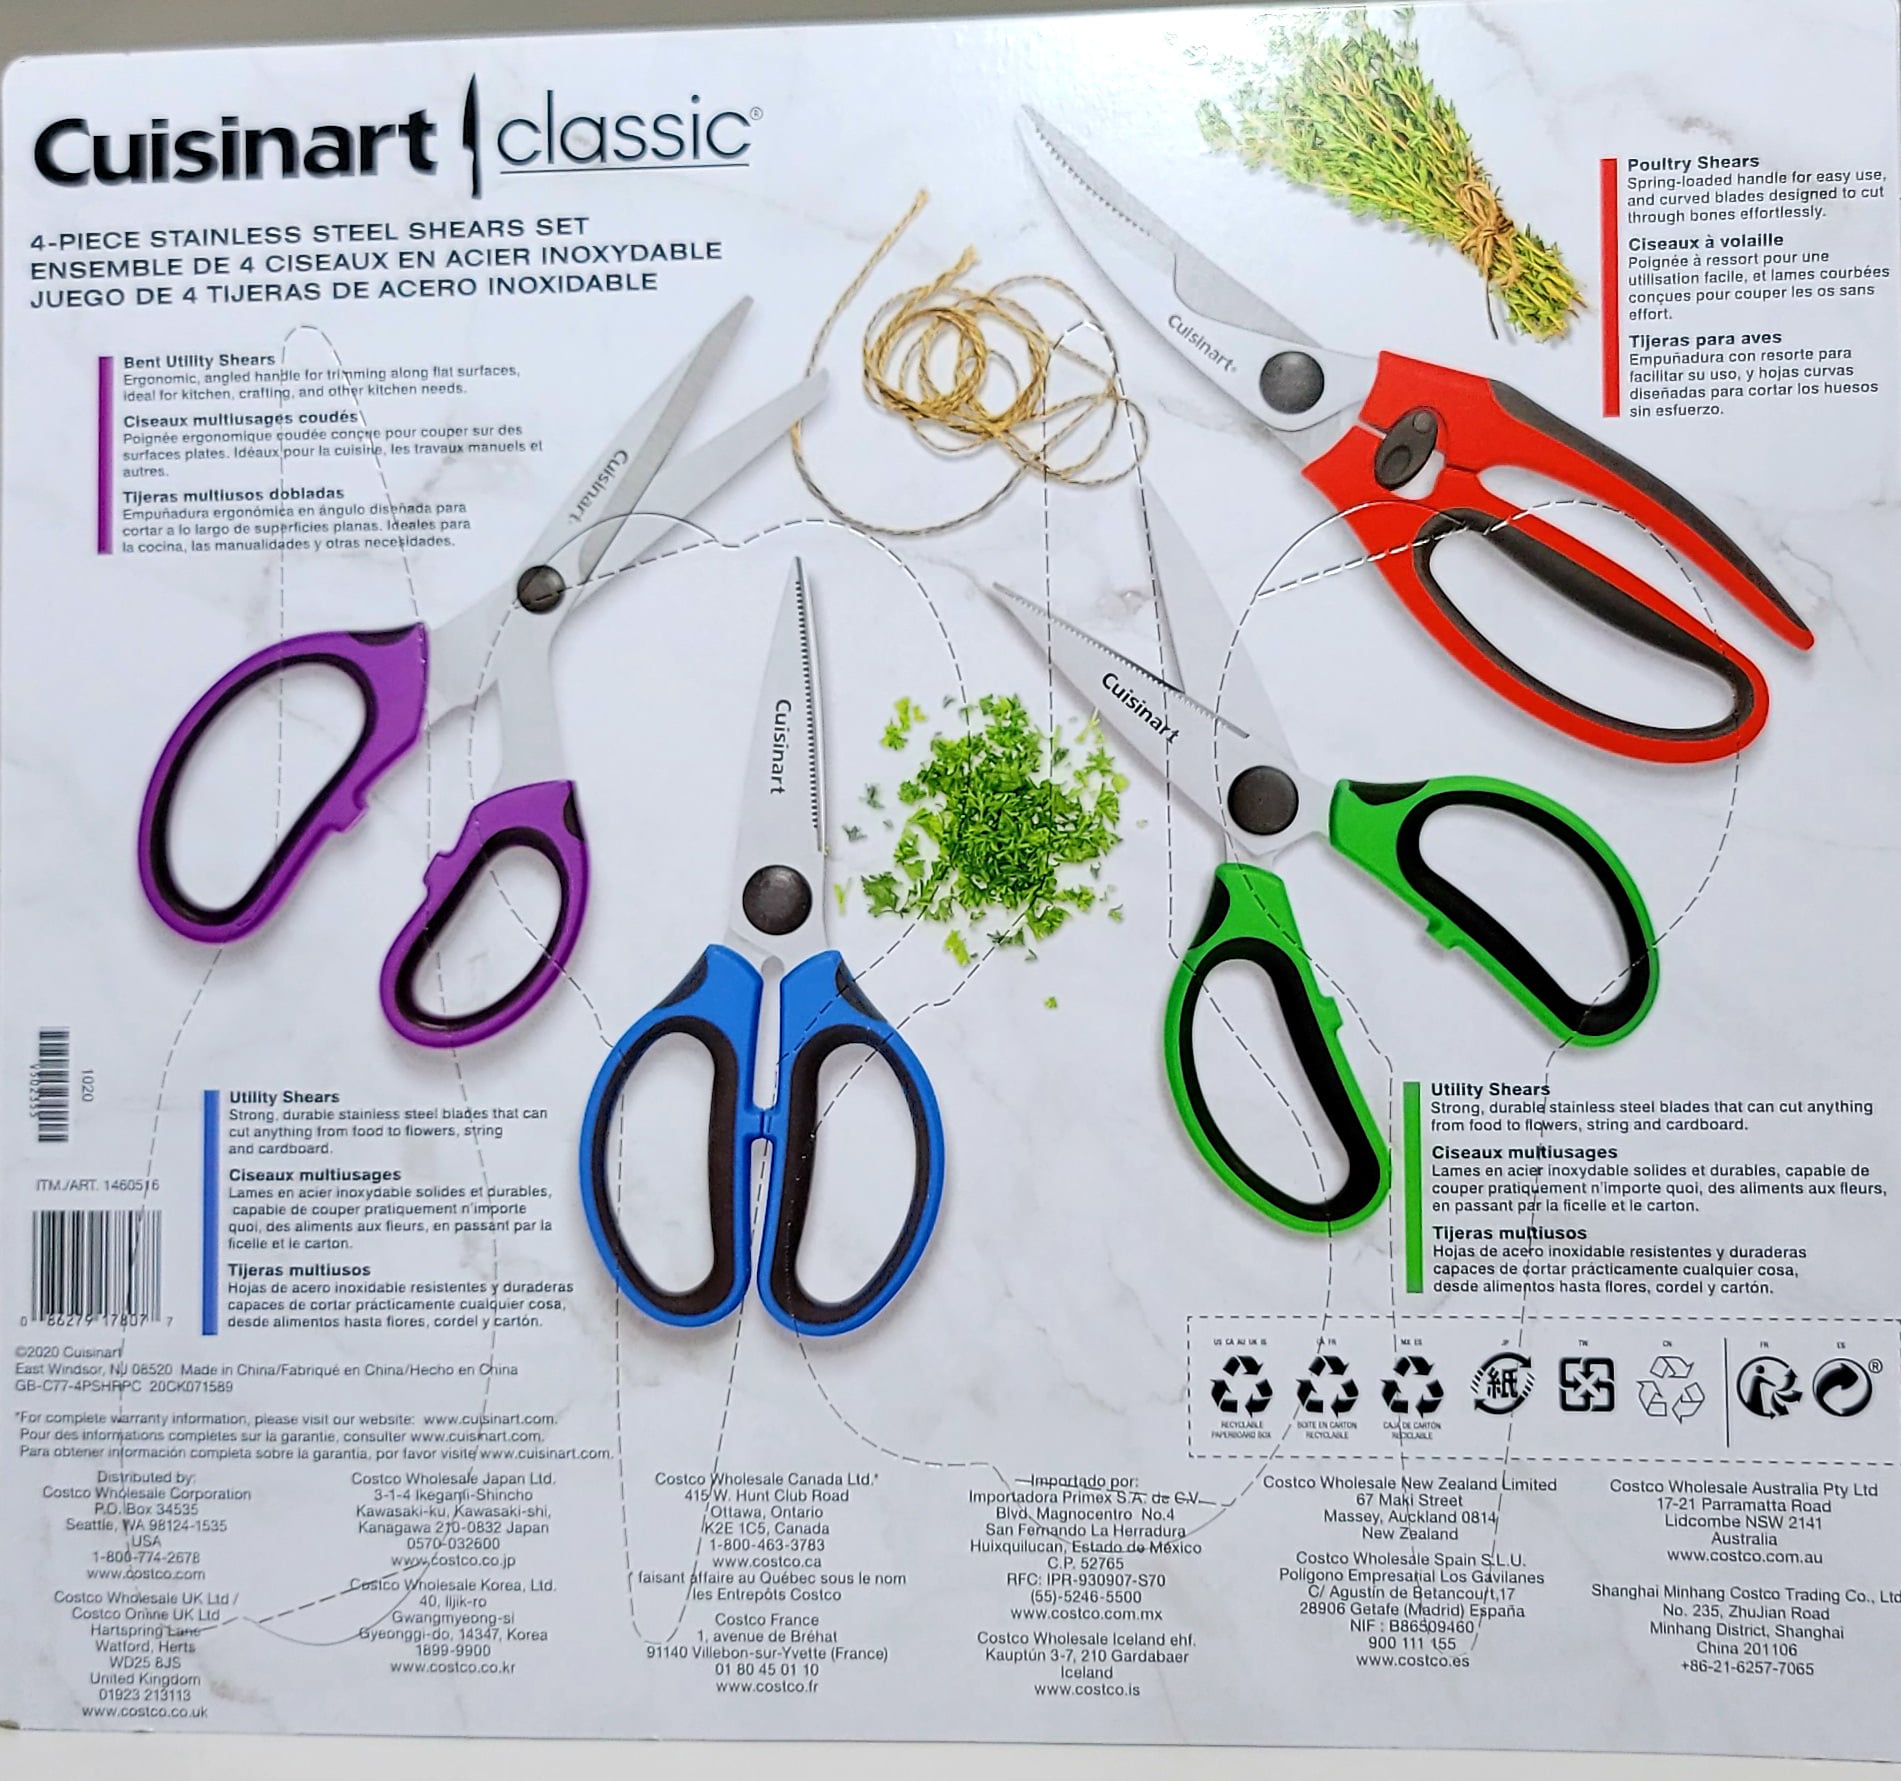 Cuisinart 4-piece Stainless Steel Shears Set Kitchen Scissors